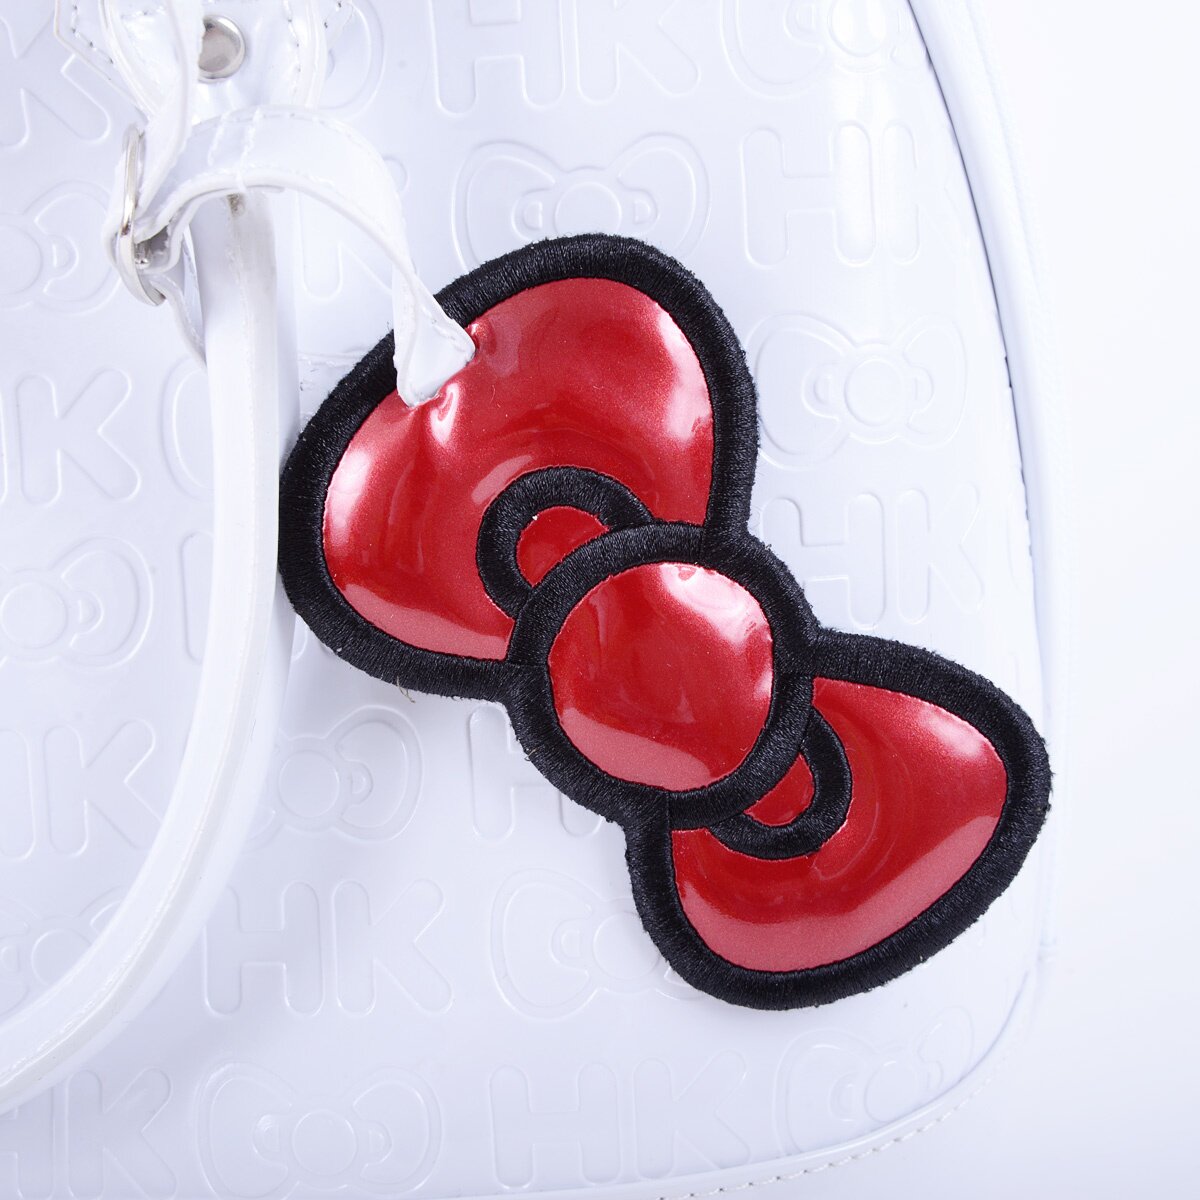 Hello Kitty Charcoal Embossed Pattern Hand Bag: Sanrio - Tokyo